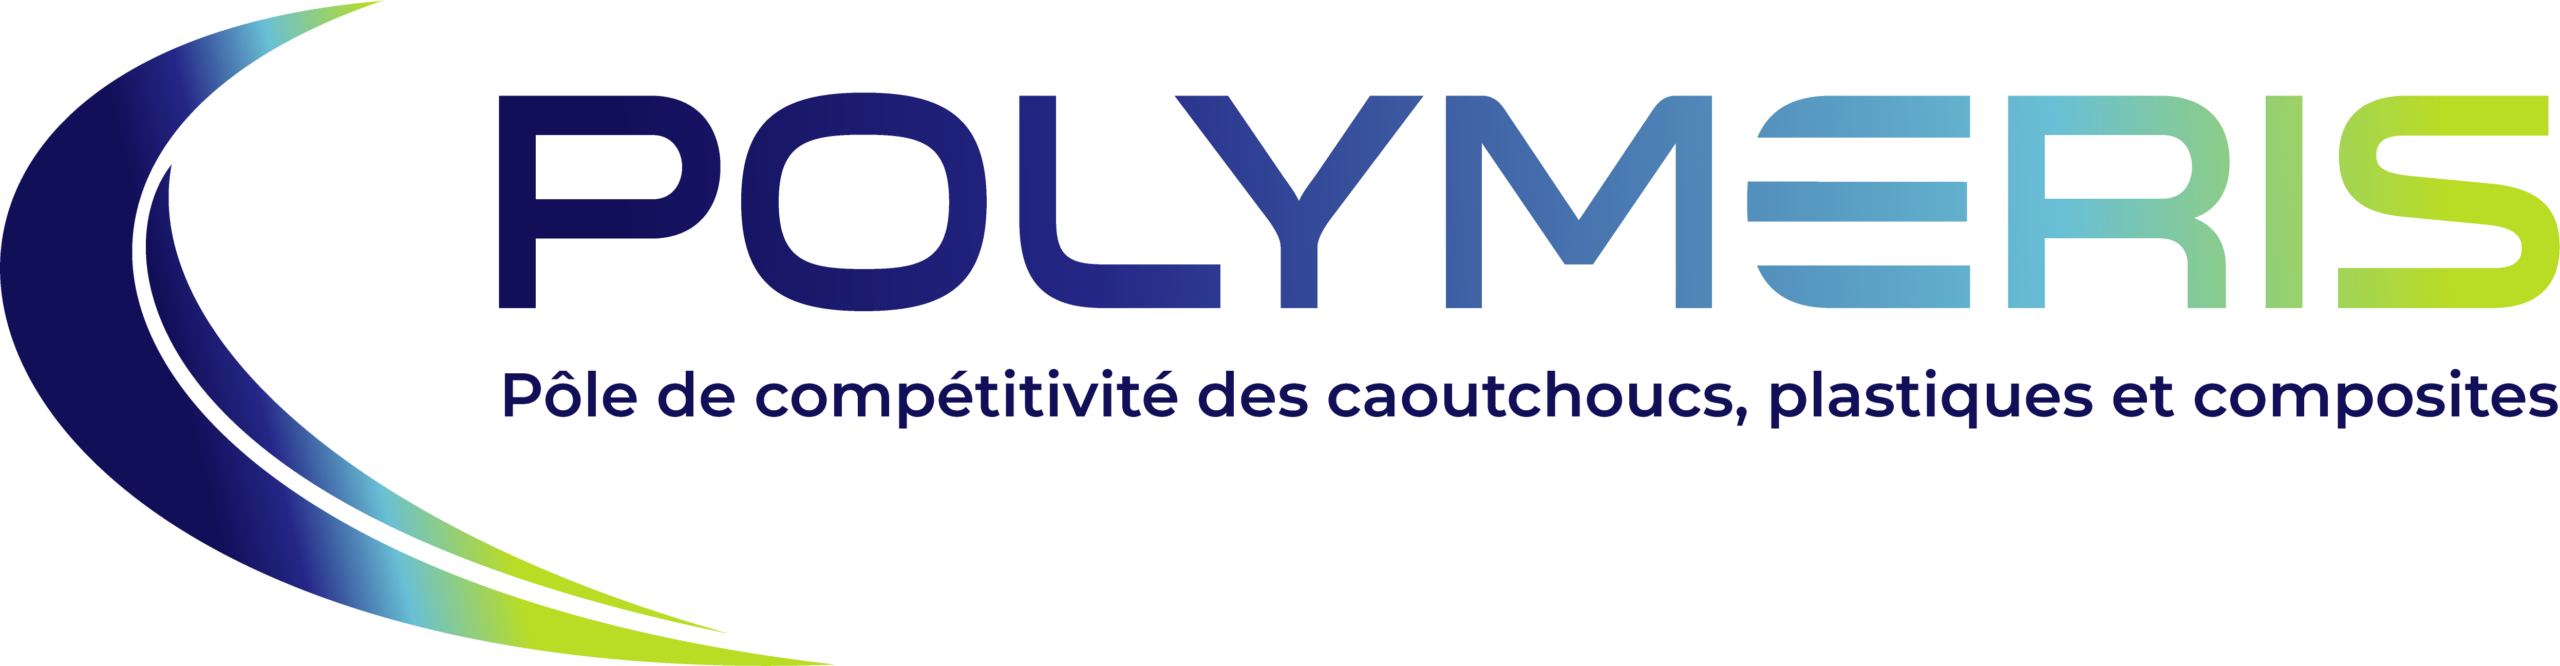 logo polymeris